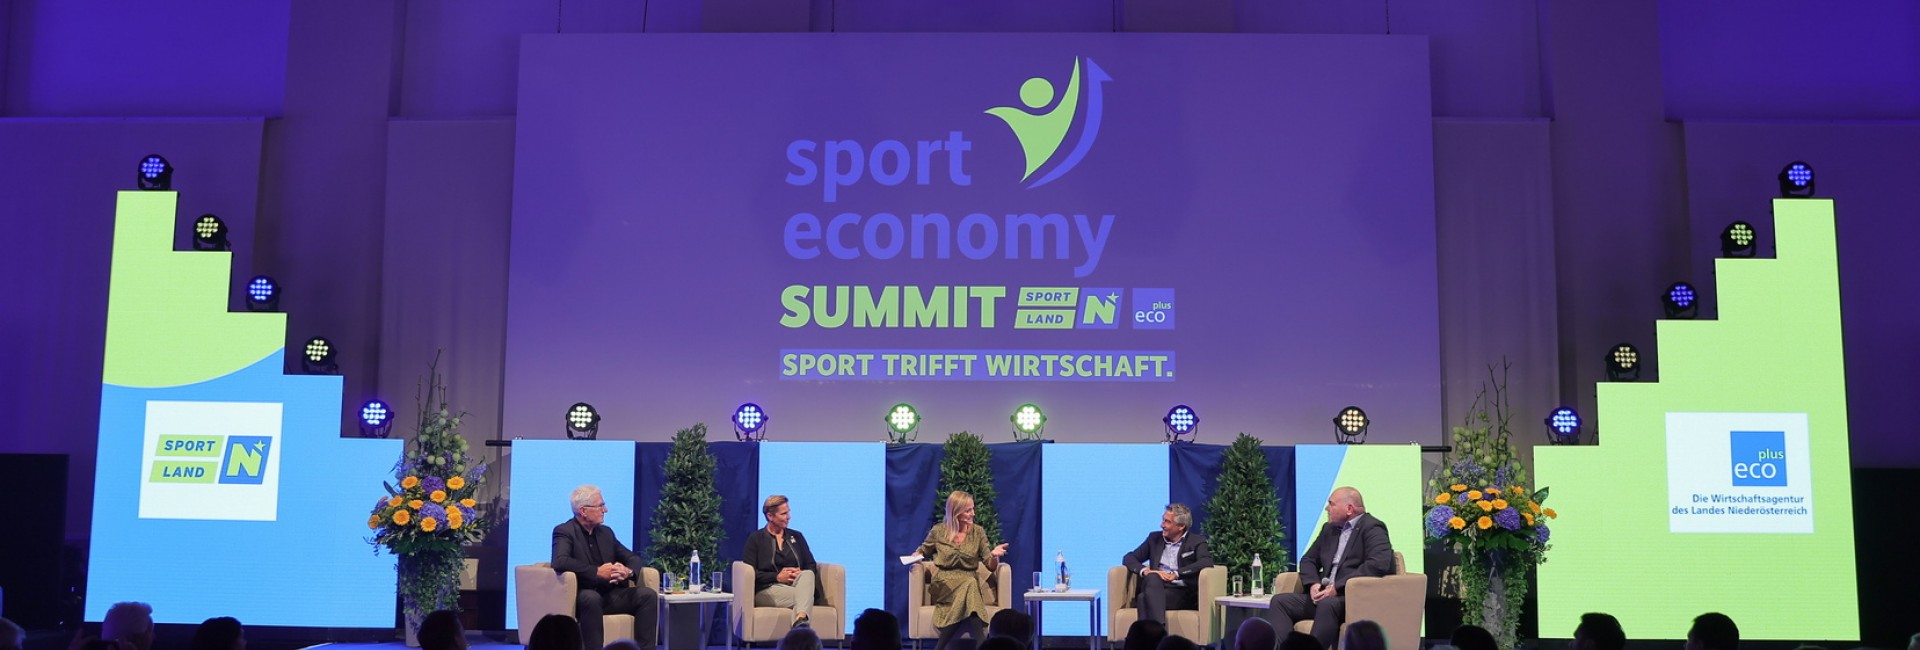 sport economy summit